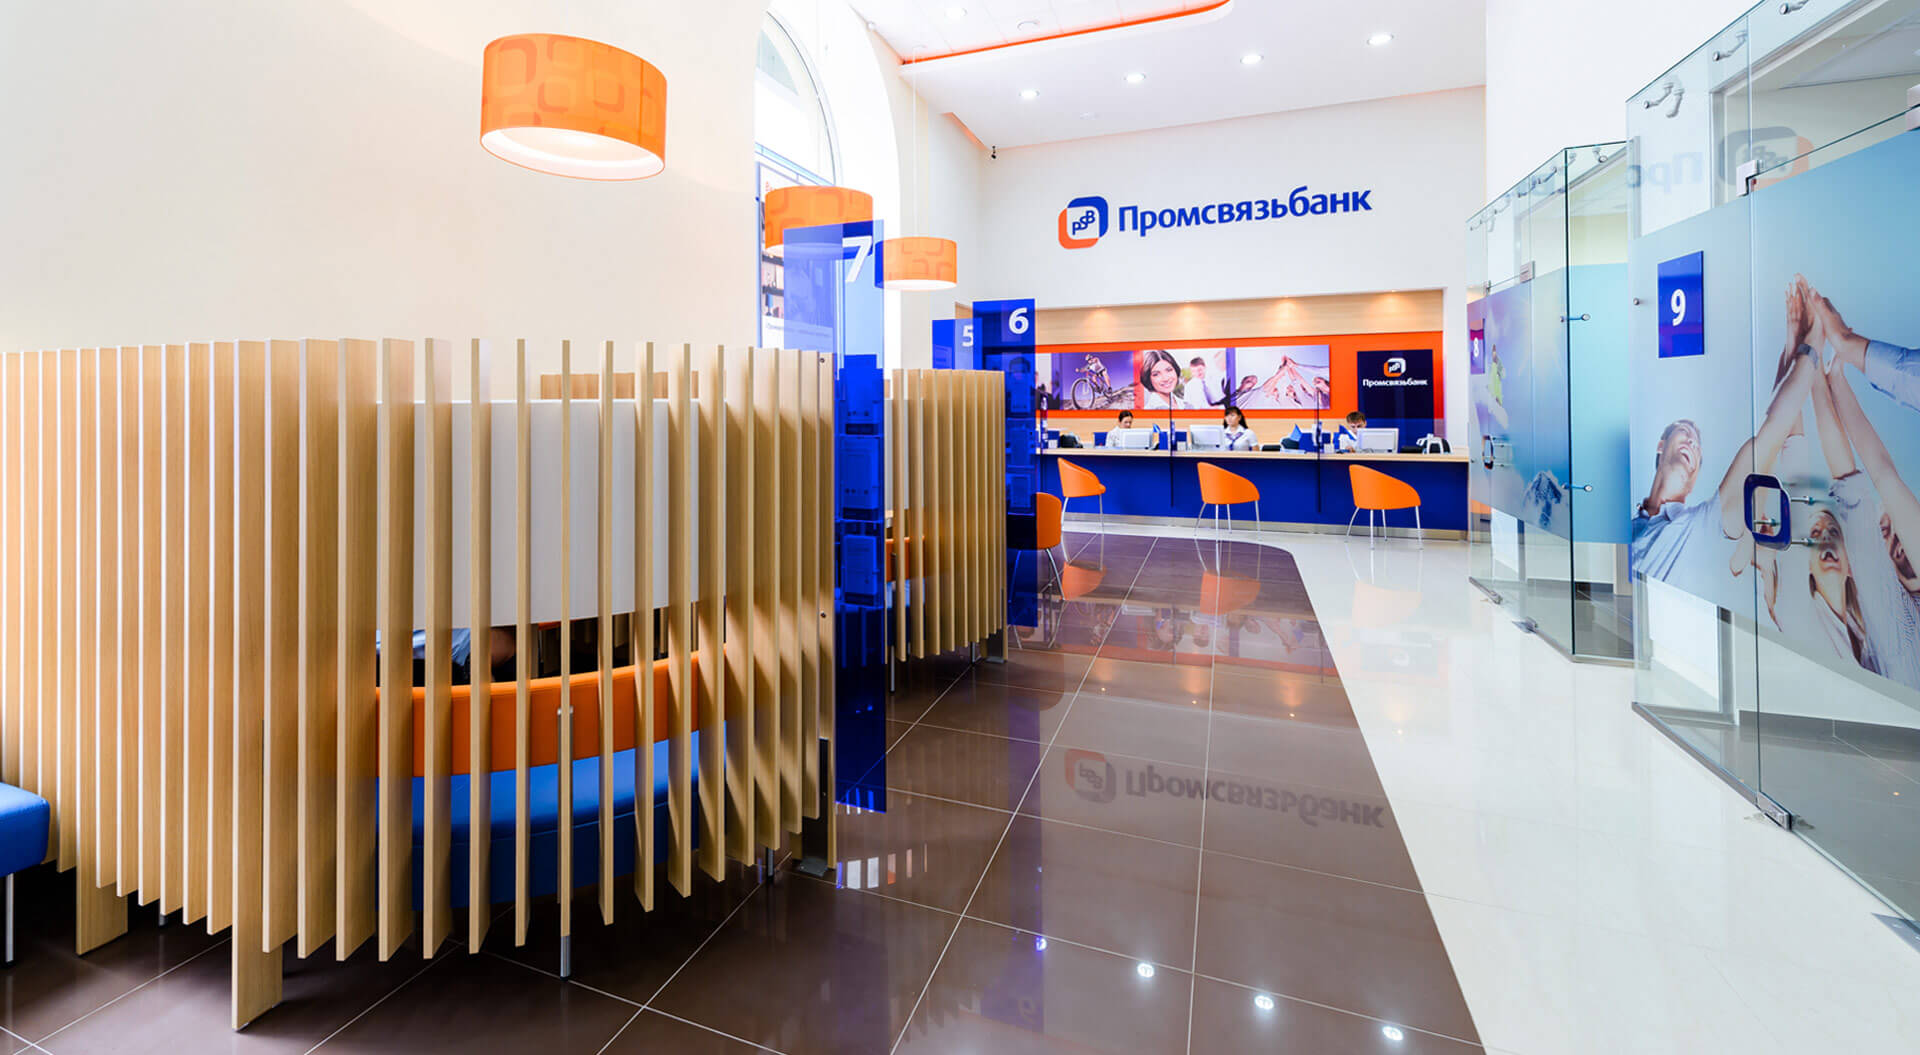 Promsvyazbank branch retail interior banking hall design and branding